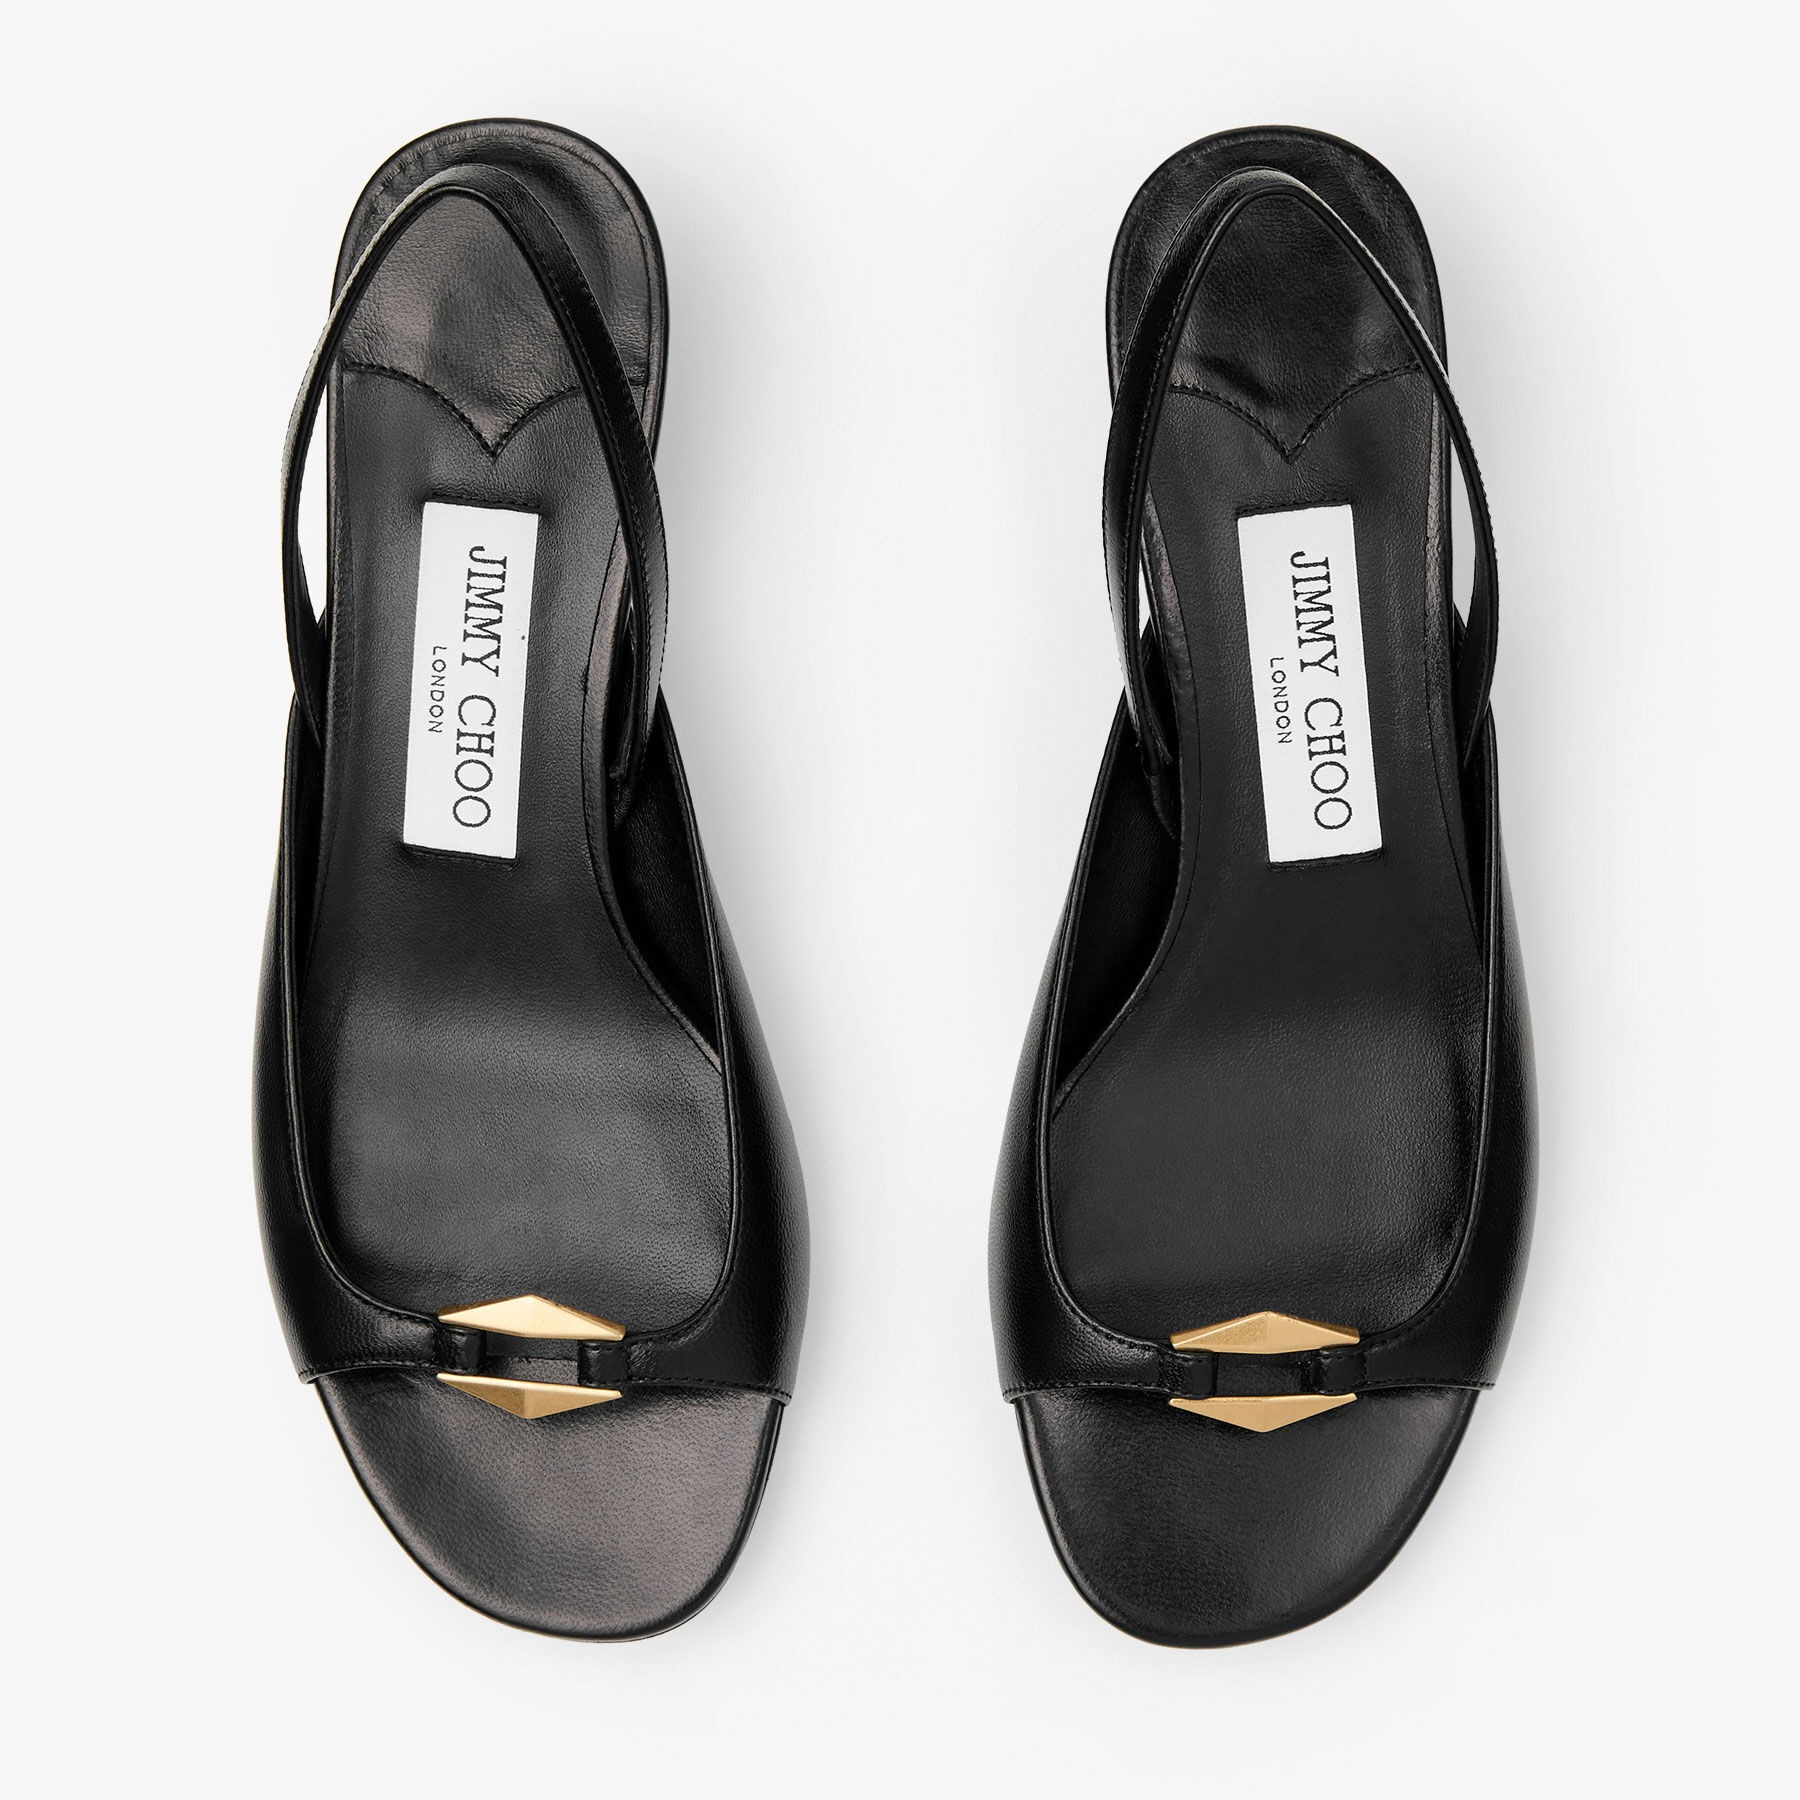 Lev 35
Black Nappa Leather Sandals - 4